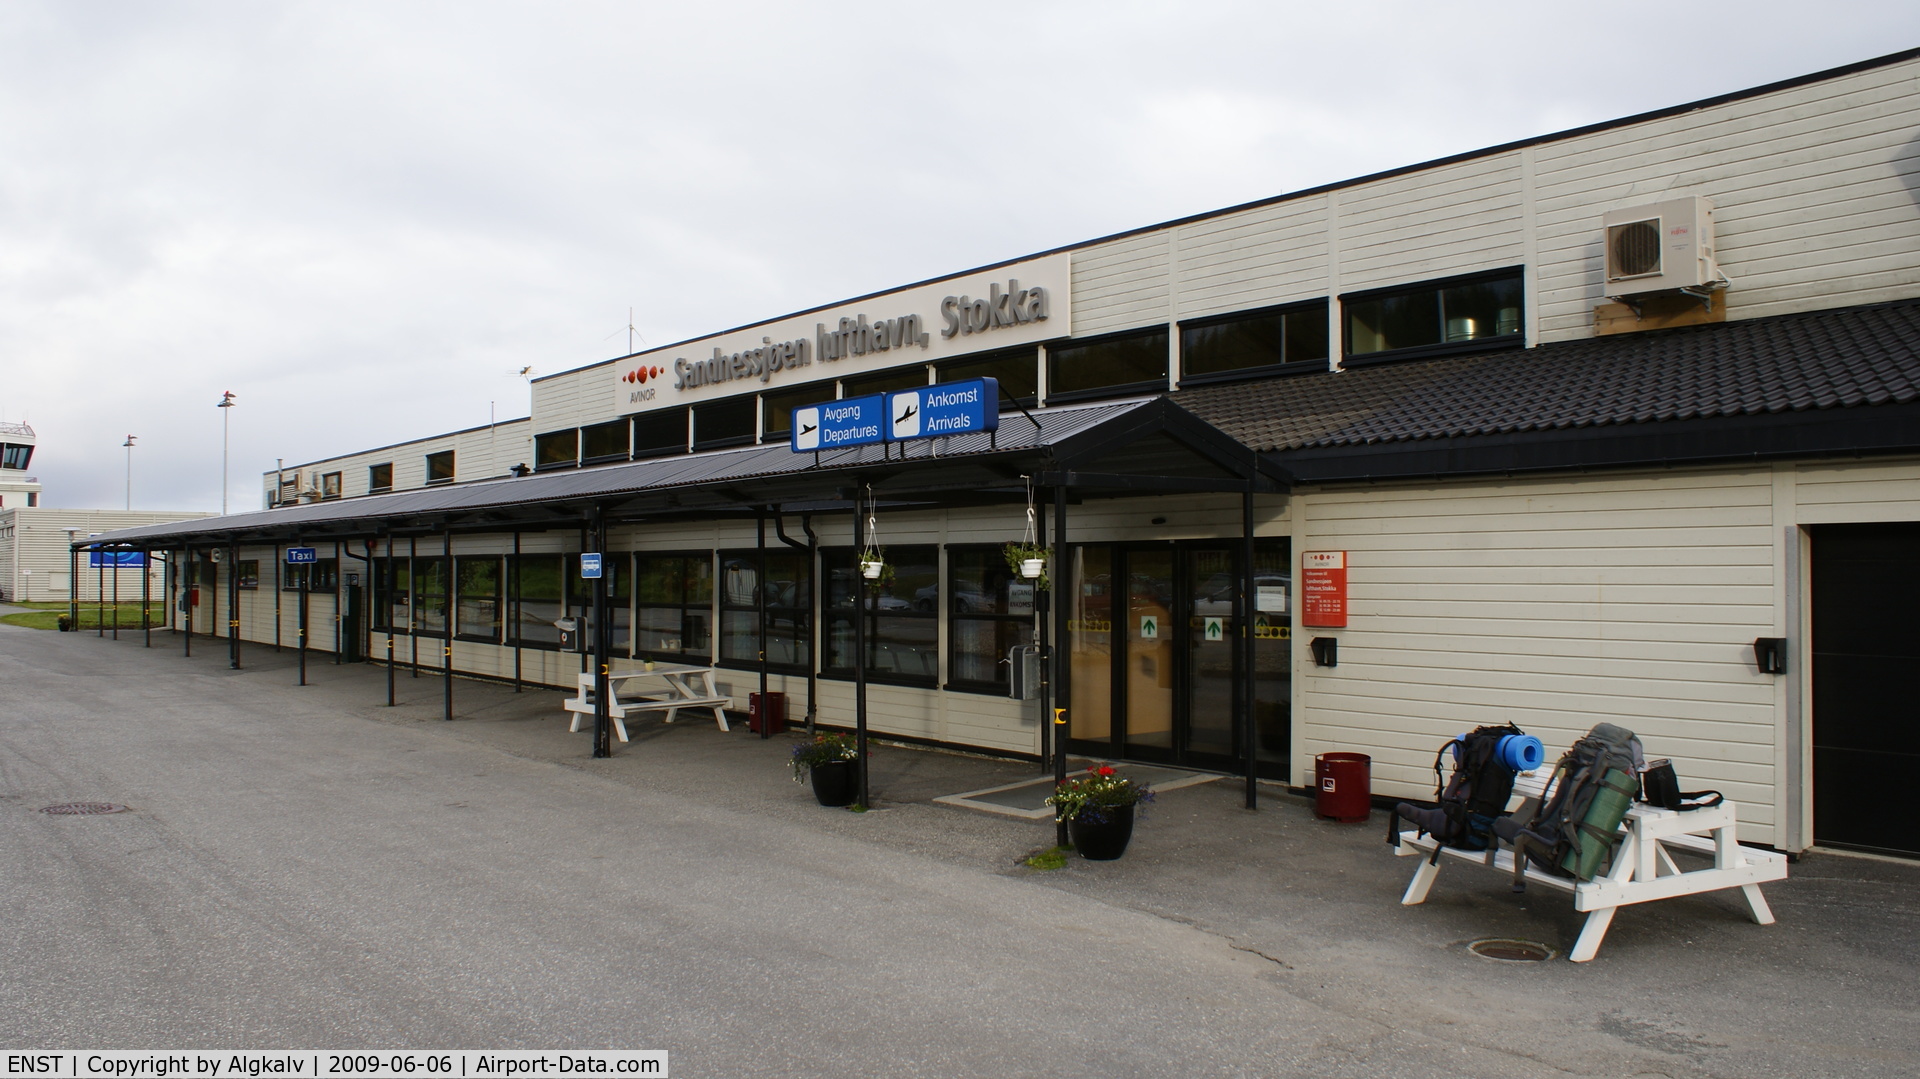 Sandnessjøen Airport, Stokka, Sandnessjøen, Nordland Norway (ENST) - Sandnessjøen Airport, Norway.

This file is licensed under the Creative Commons Attribution 3.0 Unported license